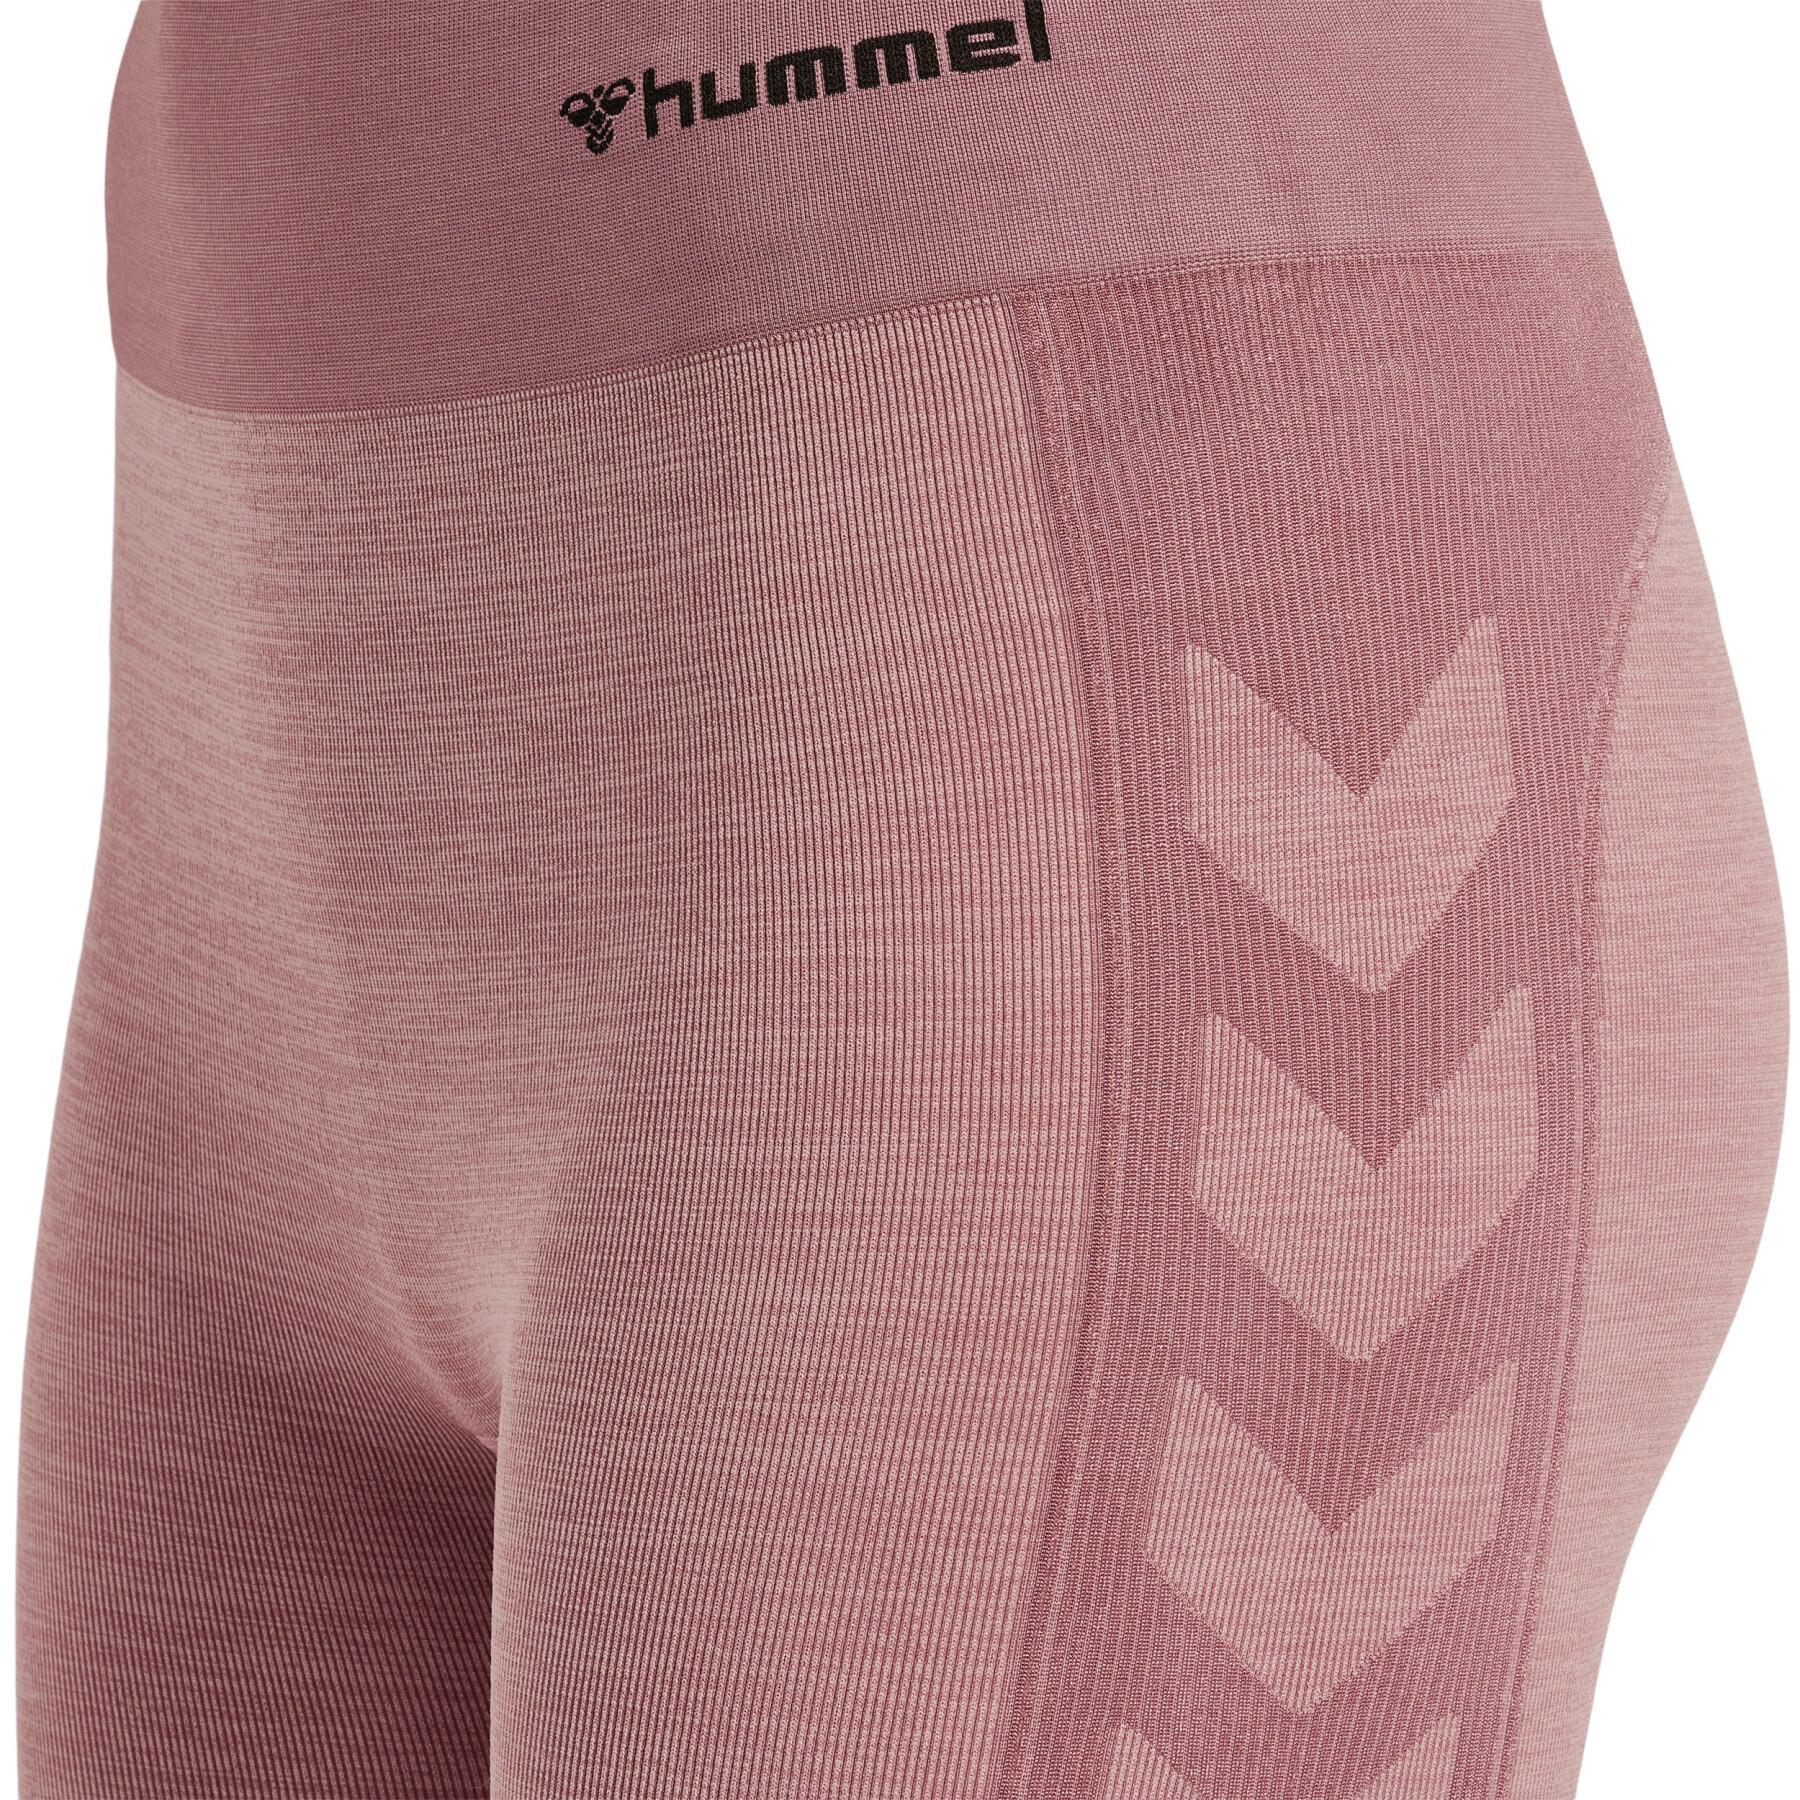 Pantalones cortos sin costuras para mujer Hummel Clea